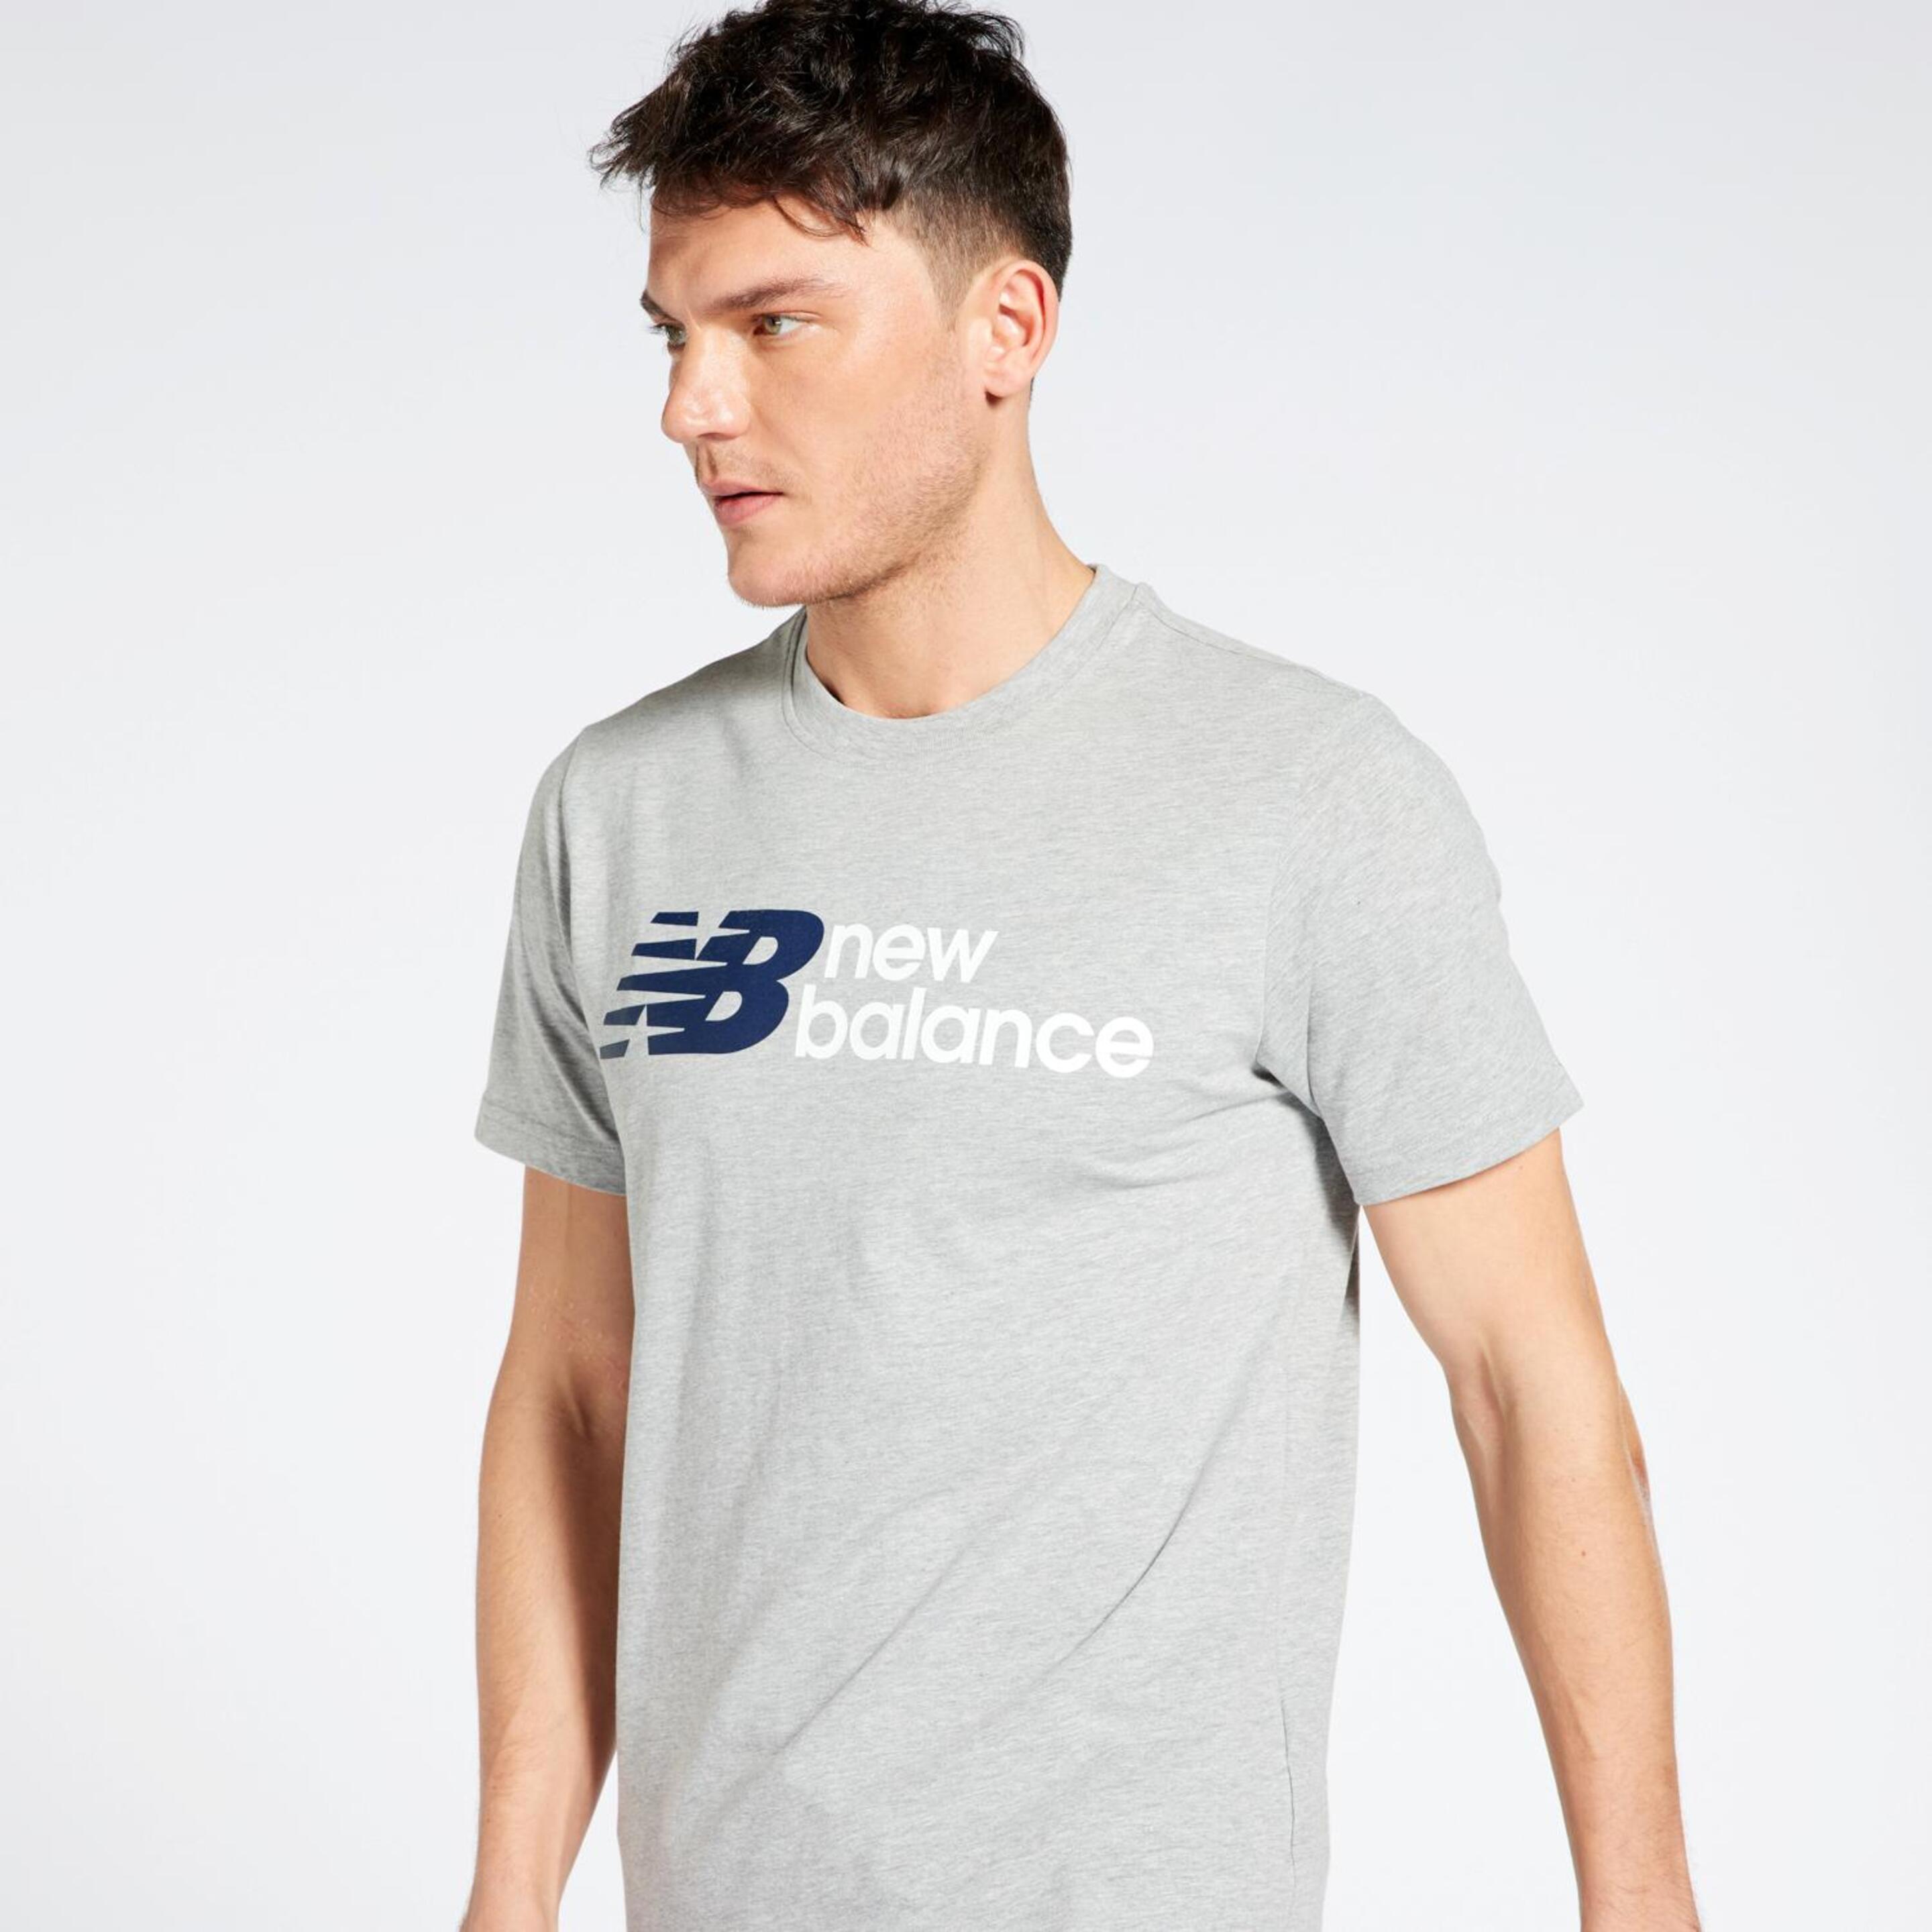 New Balance Old School - Gris - Camiseta Hombre